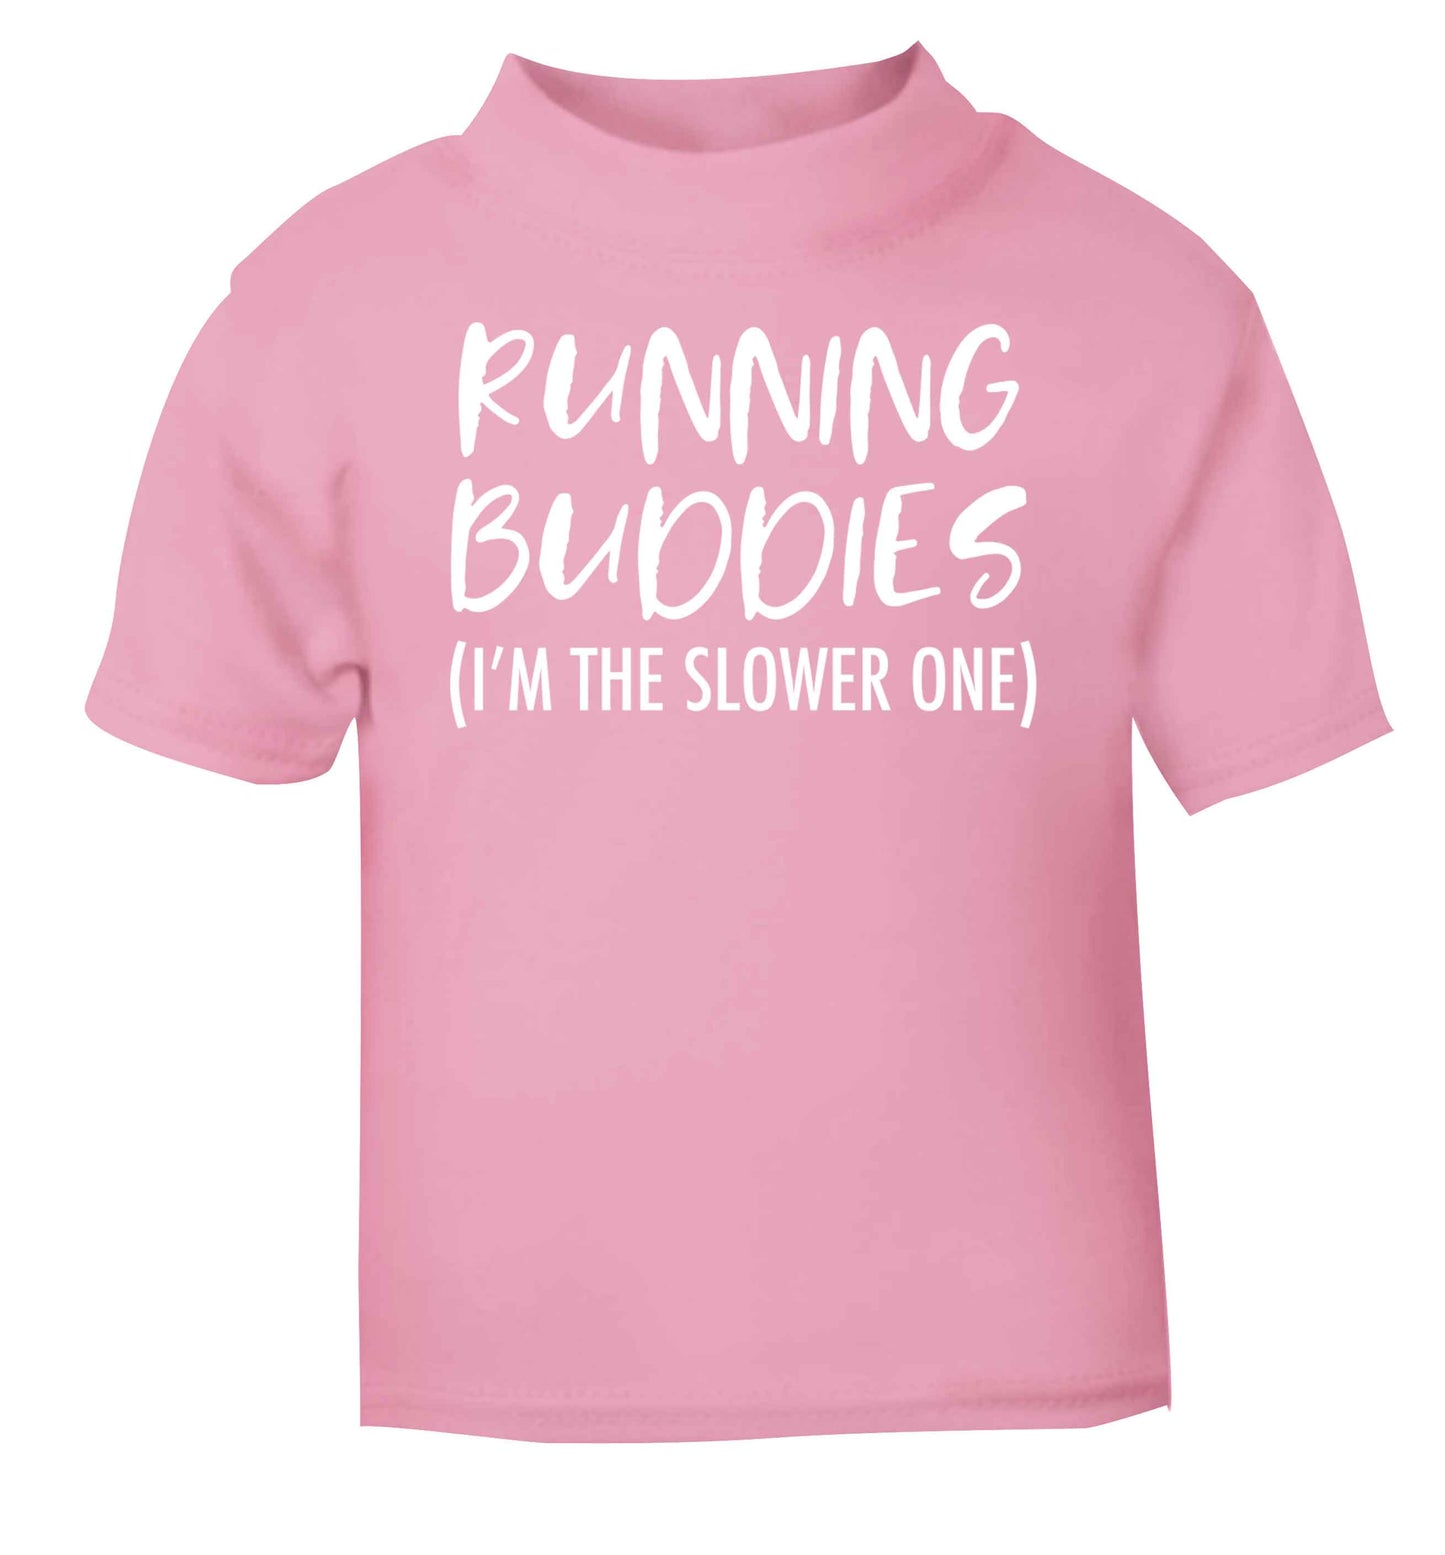 Running buddies (I'm the slower one) light pink baby toddler Tshirt 2 Years